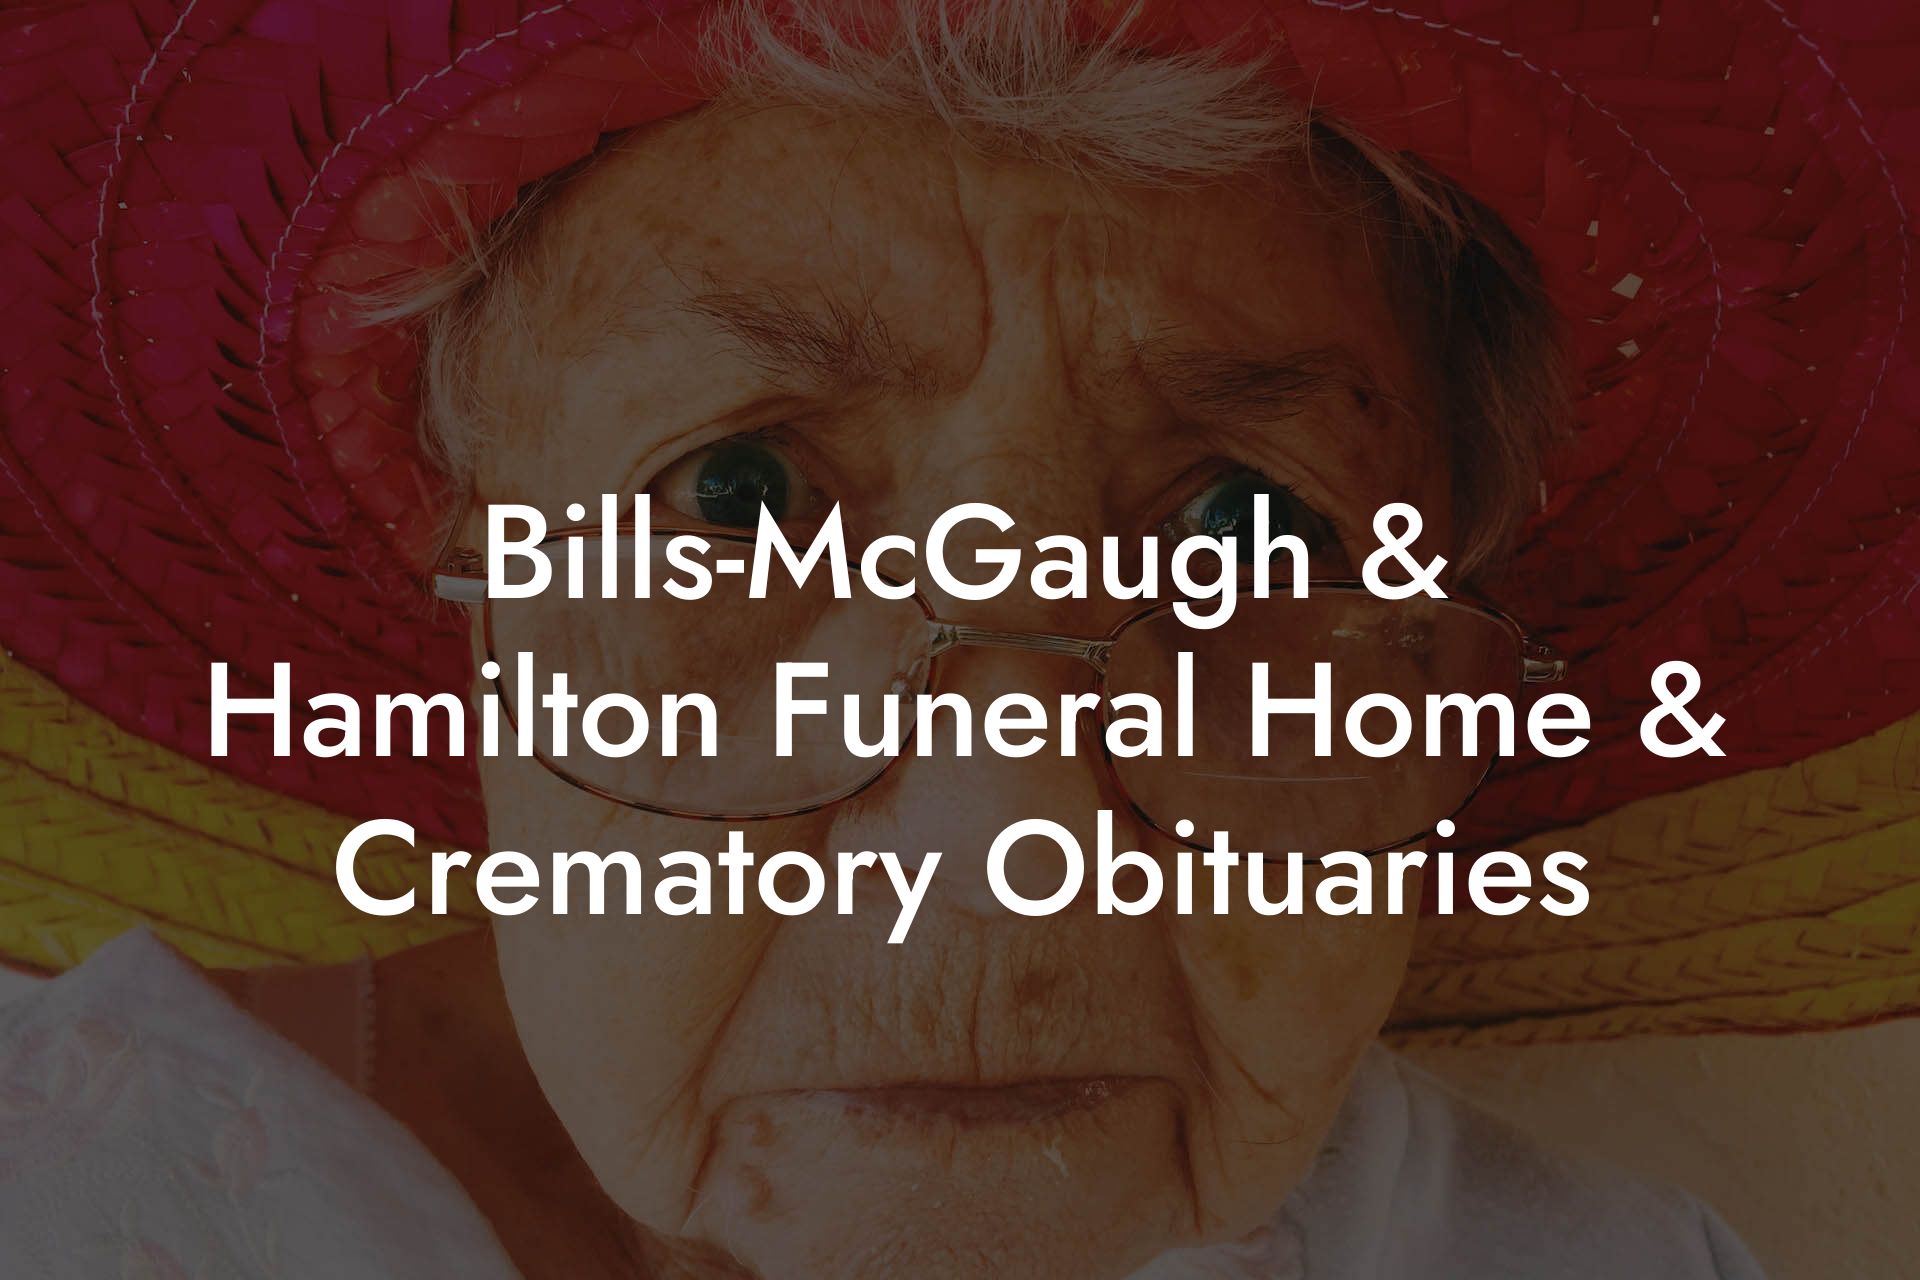 Bills-McGaugh & Hamilton Funeral Home & Crematory Obituaries